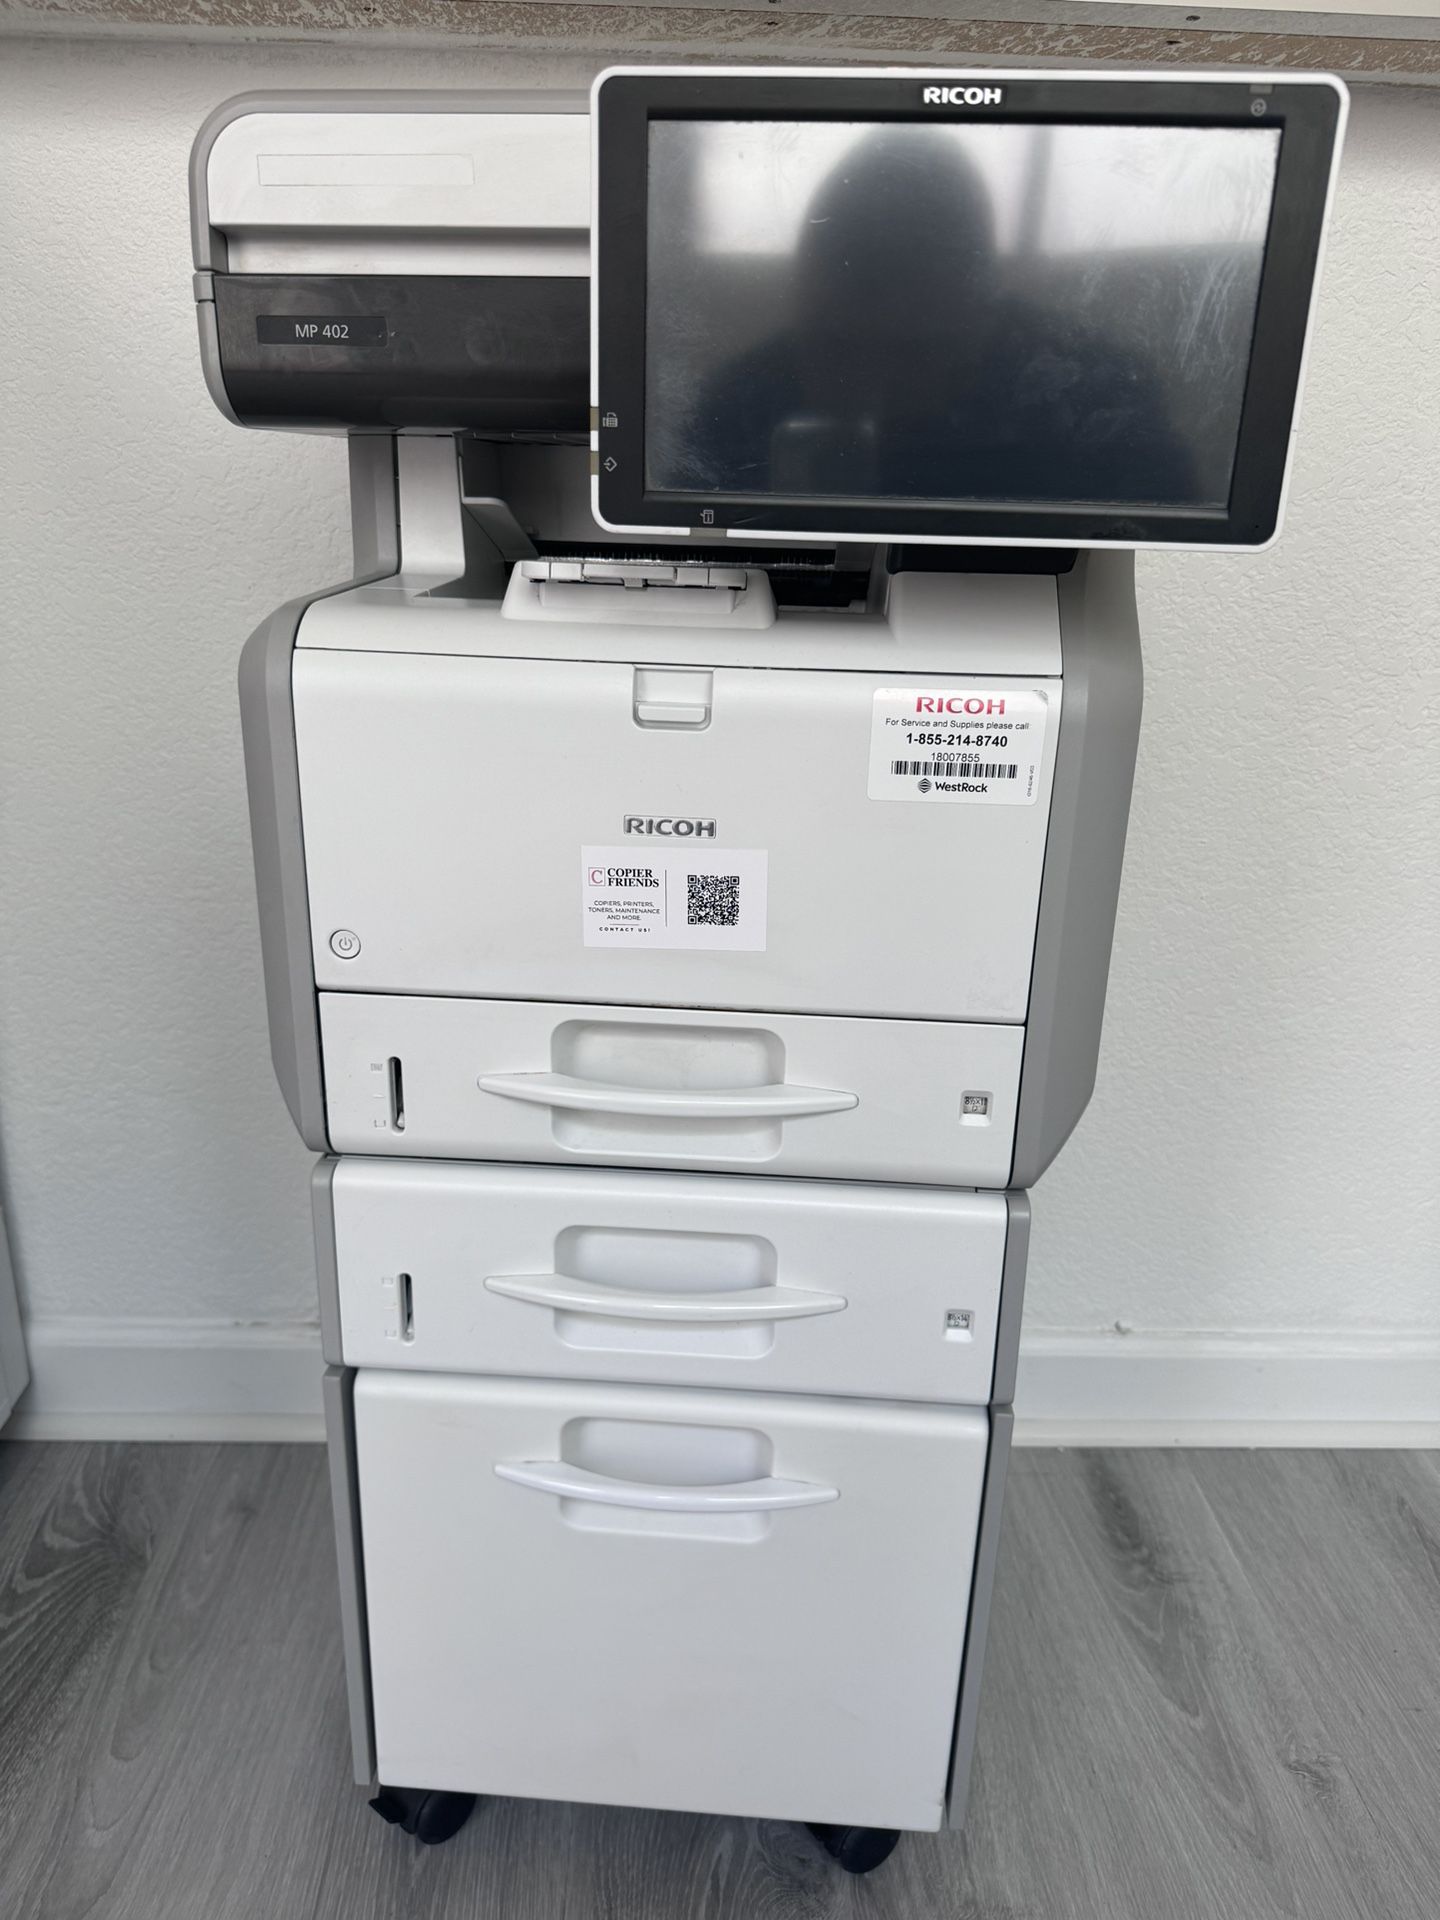 Office Printer Ricoh Mp 402 Copier Machine Laser